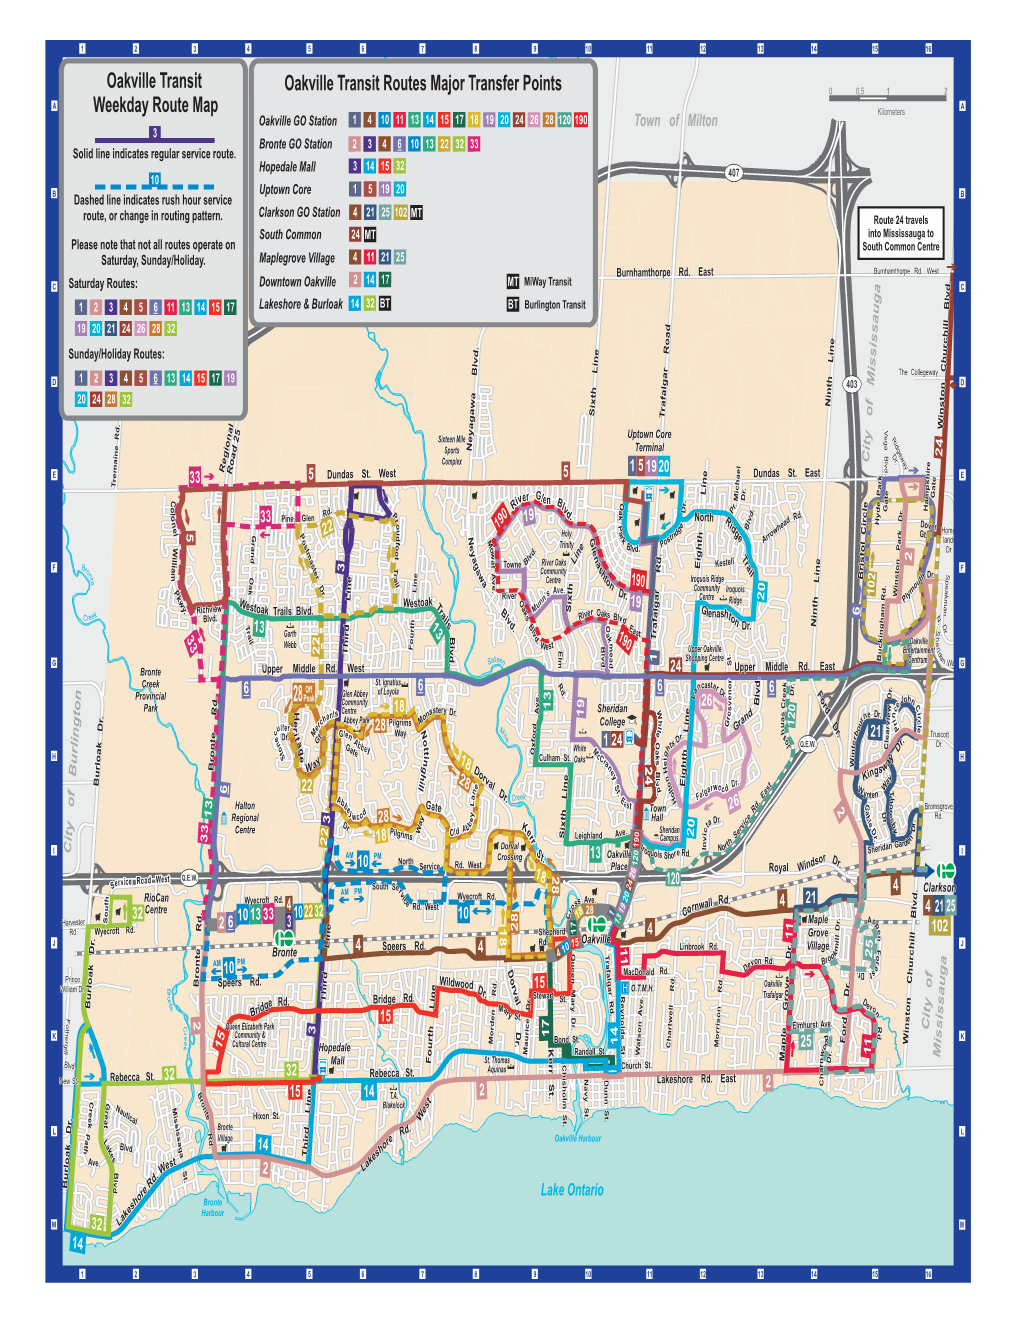 Oakville Transit Routes Major Transfer Points Oakville Transit Weekday Route